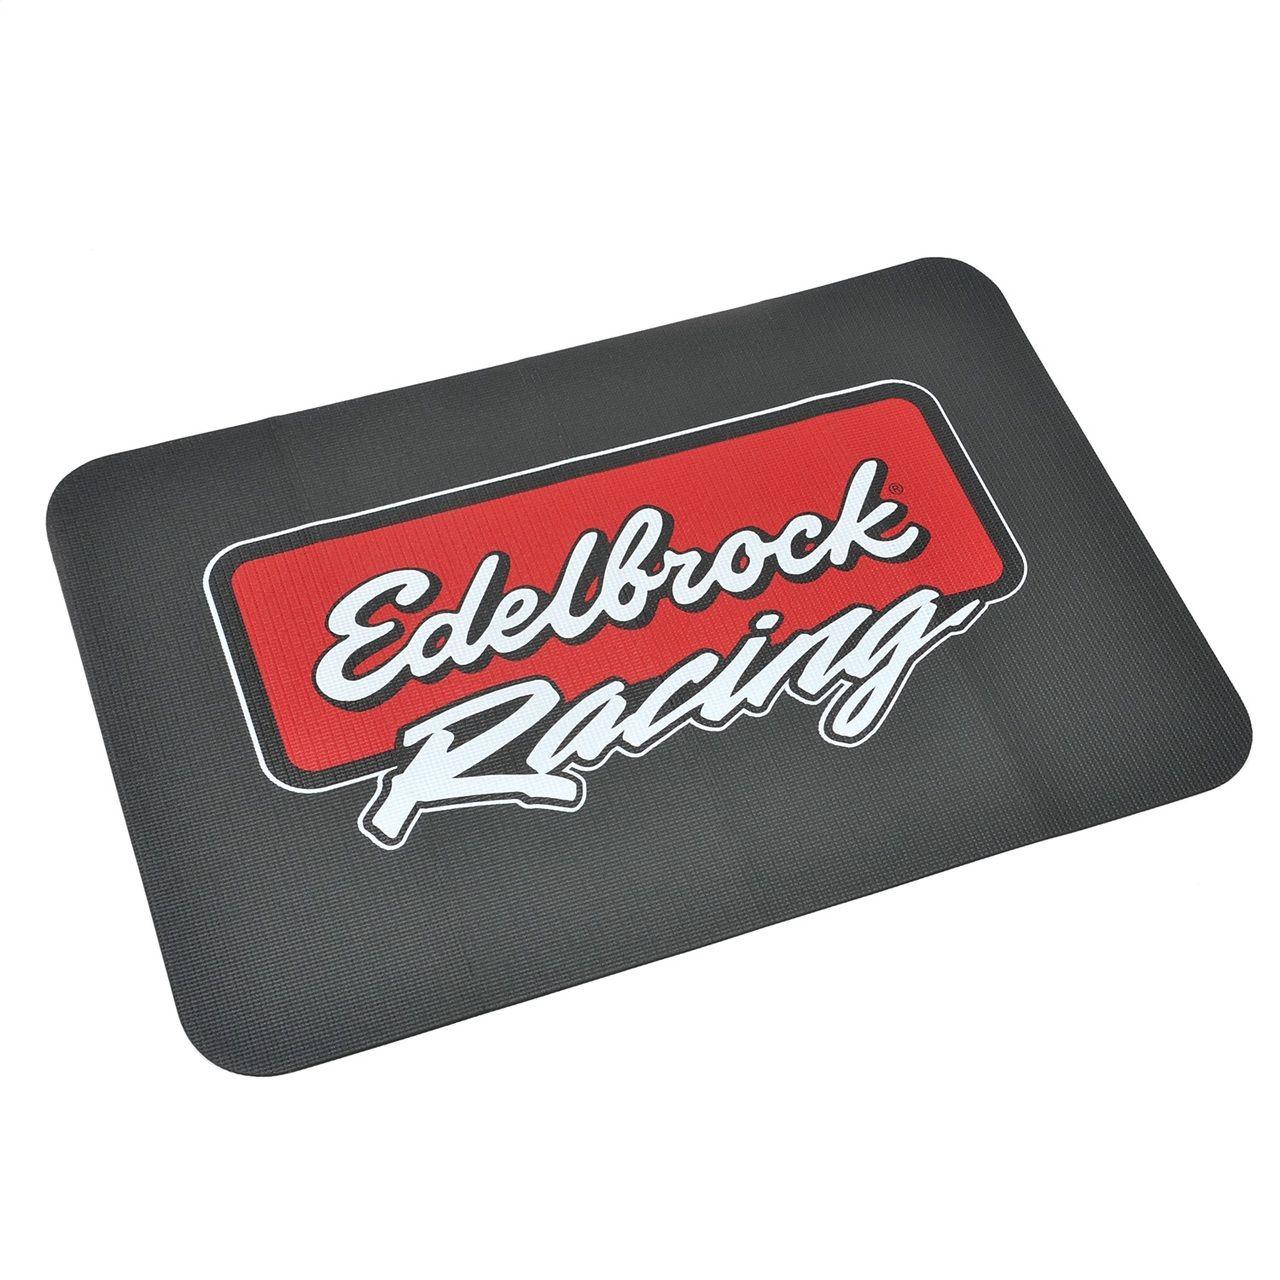 Edelbrock Logo - Edelbrock 2324 Racing Series Fender Cover